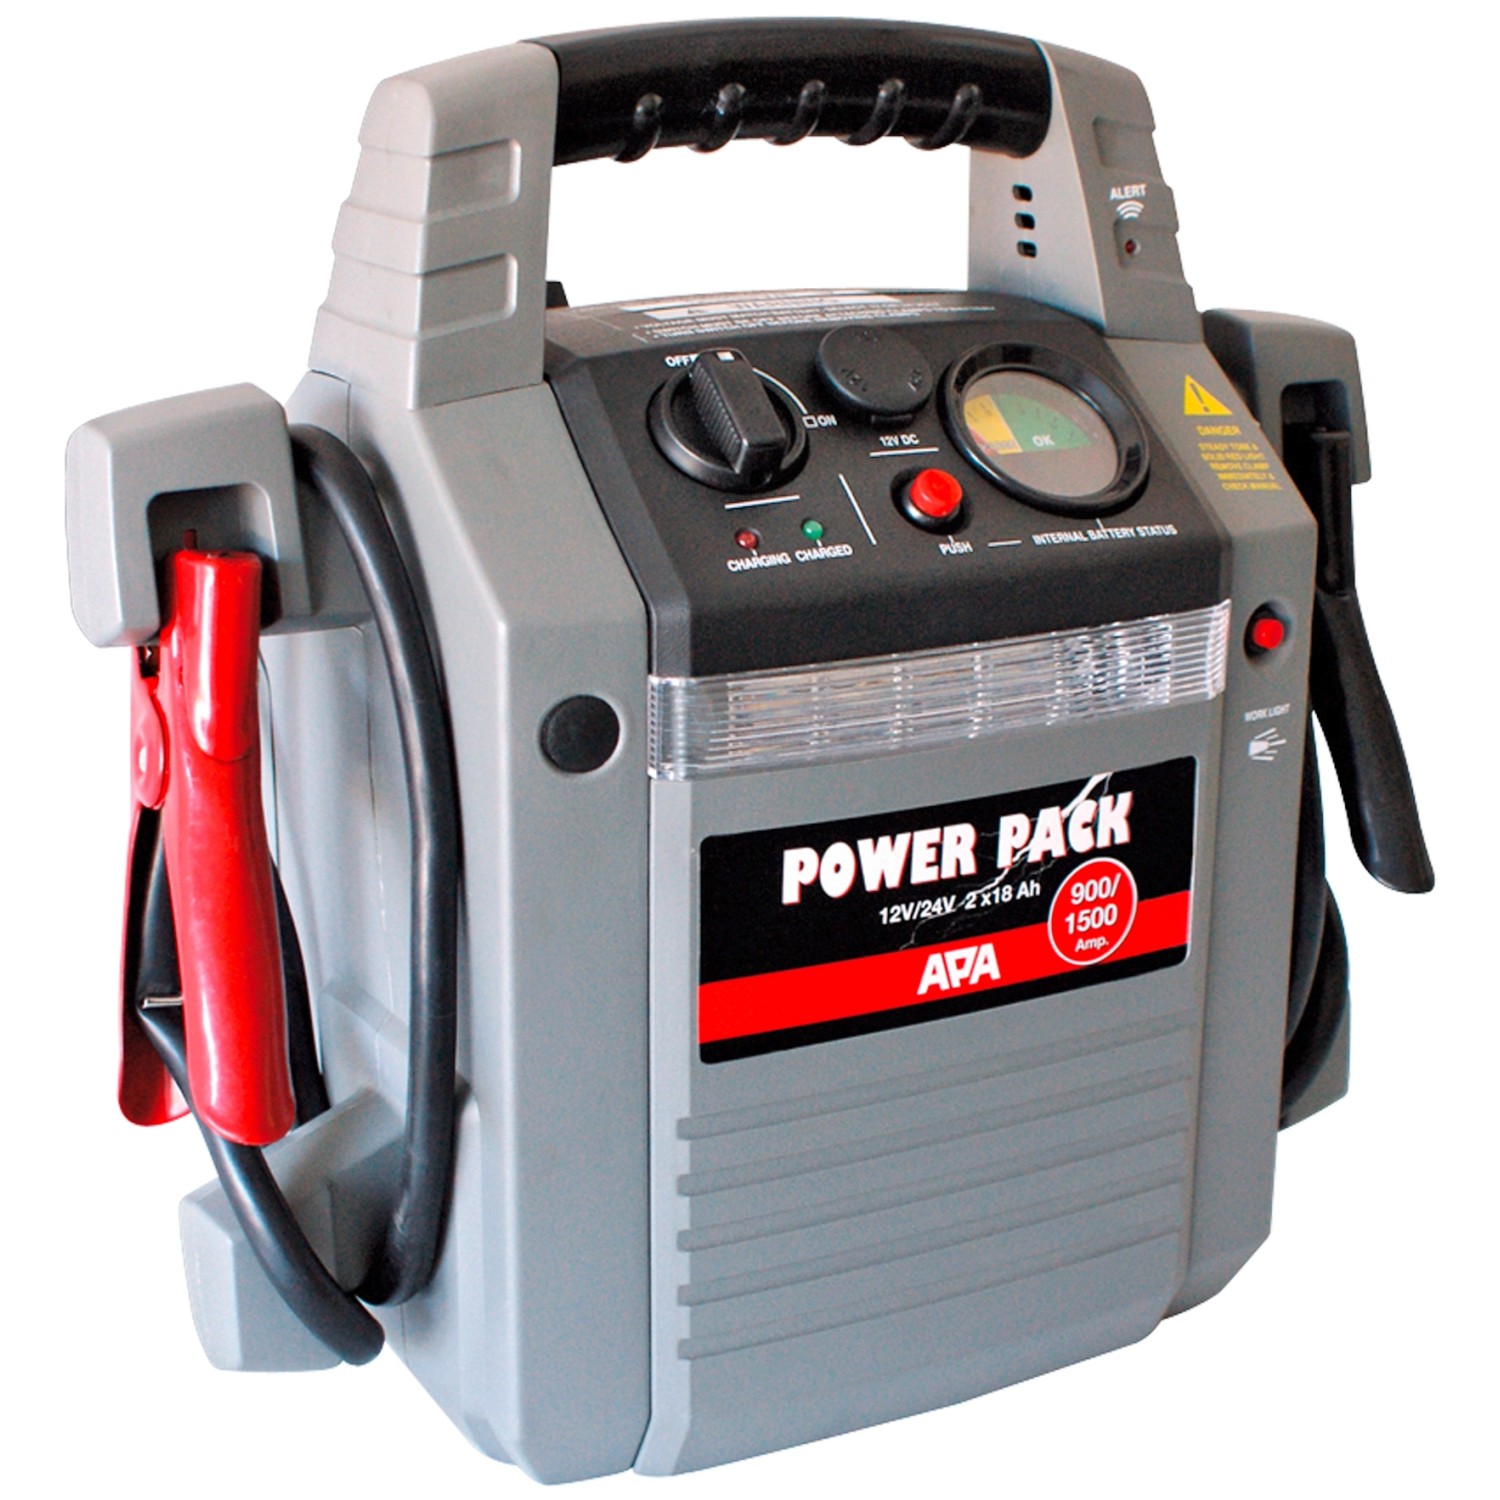 APA Autobatterie-Starthilfe Powerpack 12 V/24 V 900/1.500 A